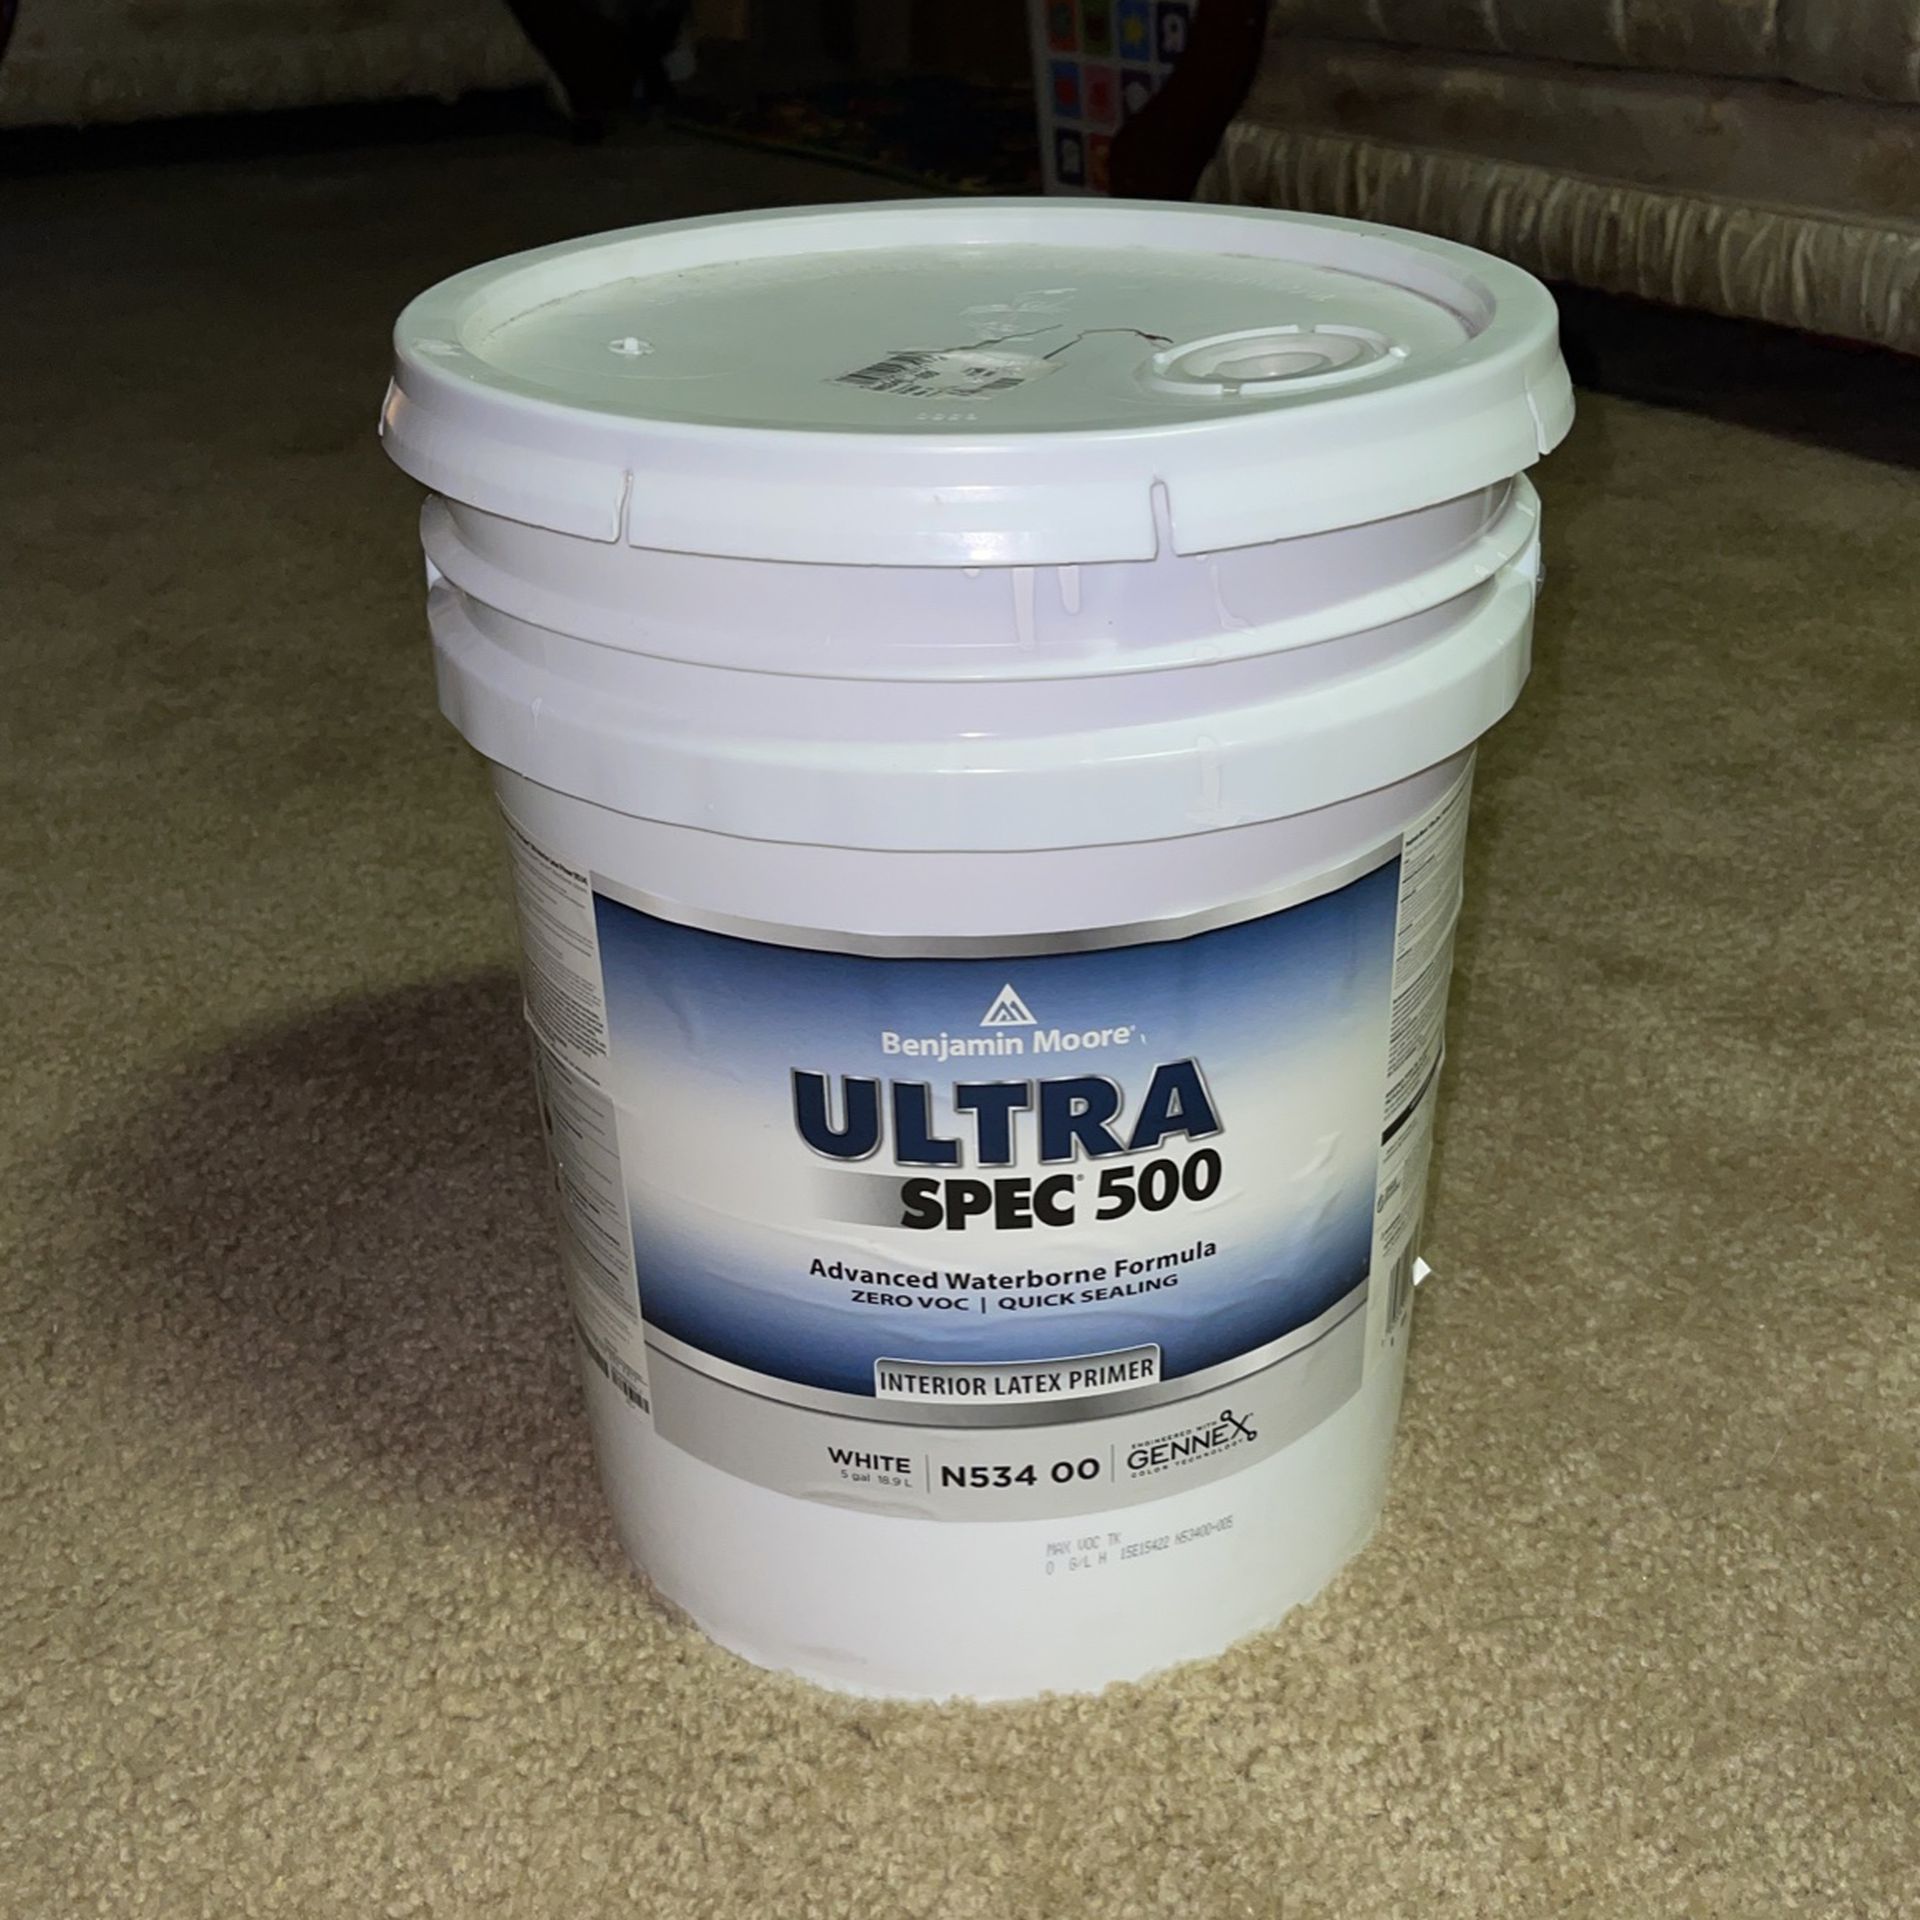 Benjamin Moore Ultra Spec 500 Interior Paint - Eggshell Finish (5 Gallon, White